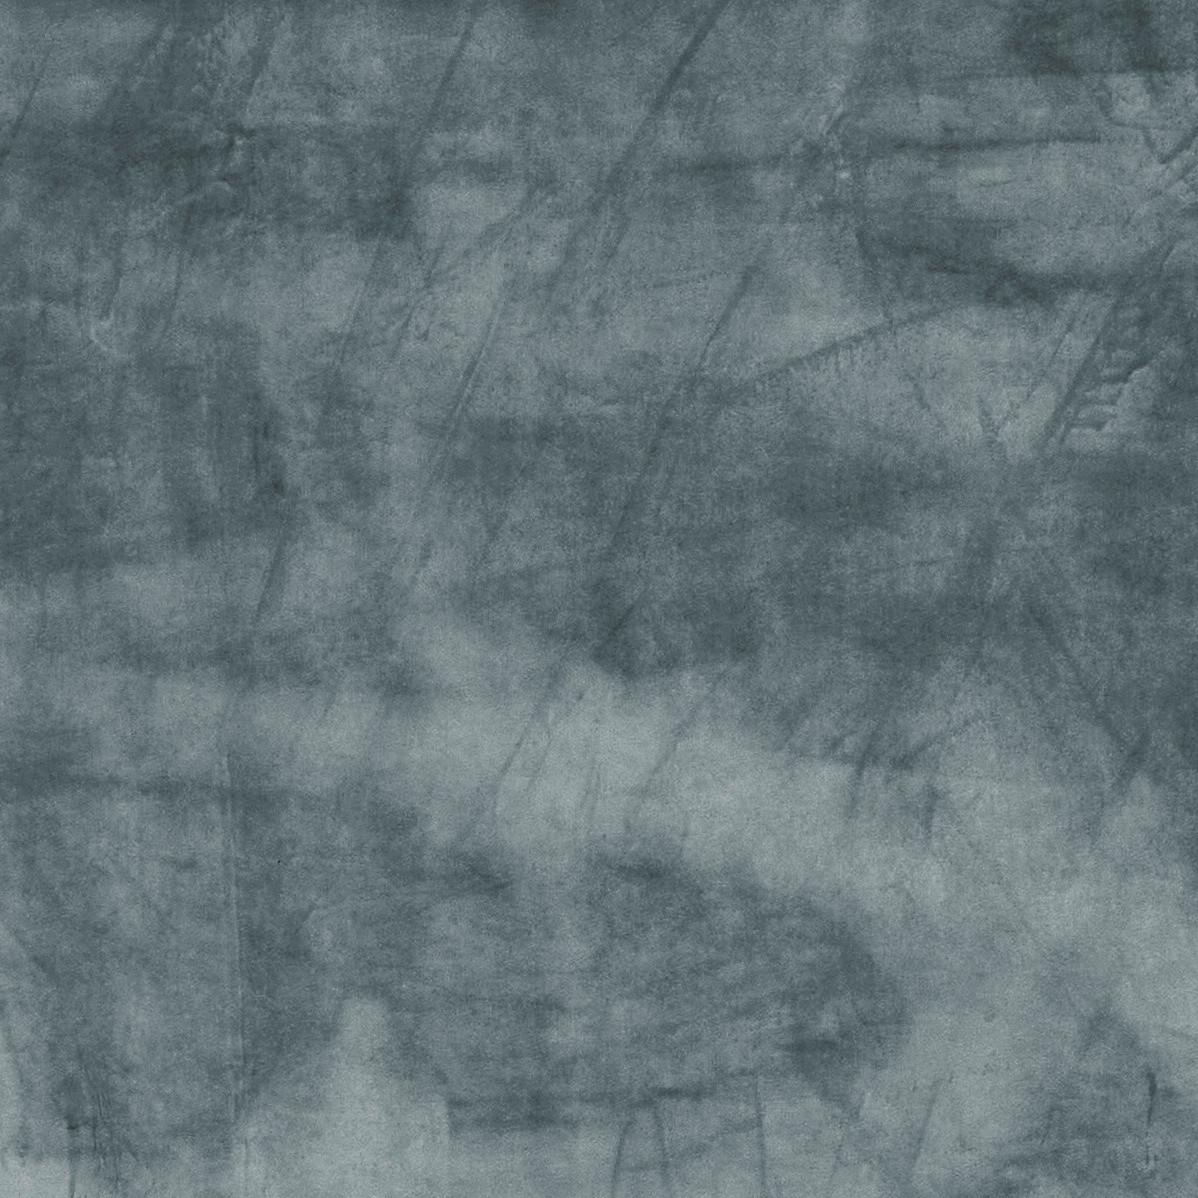 Fertigvorhang Viola in Eisblau ca. 140x245cm - Blau, KONVENTIONELL, Textil (140/245cm) - Premium Living